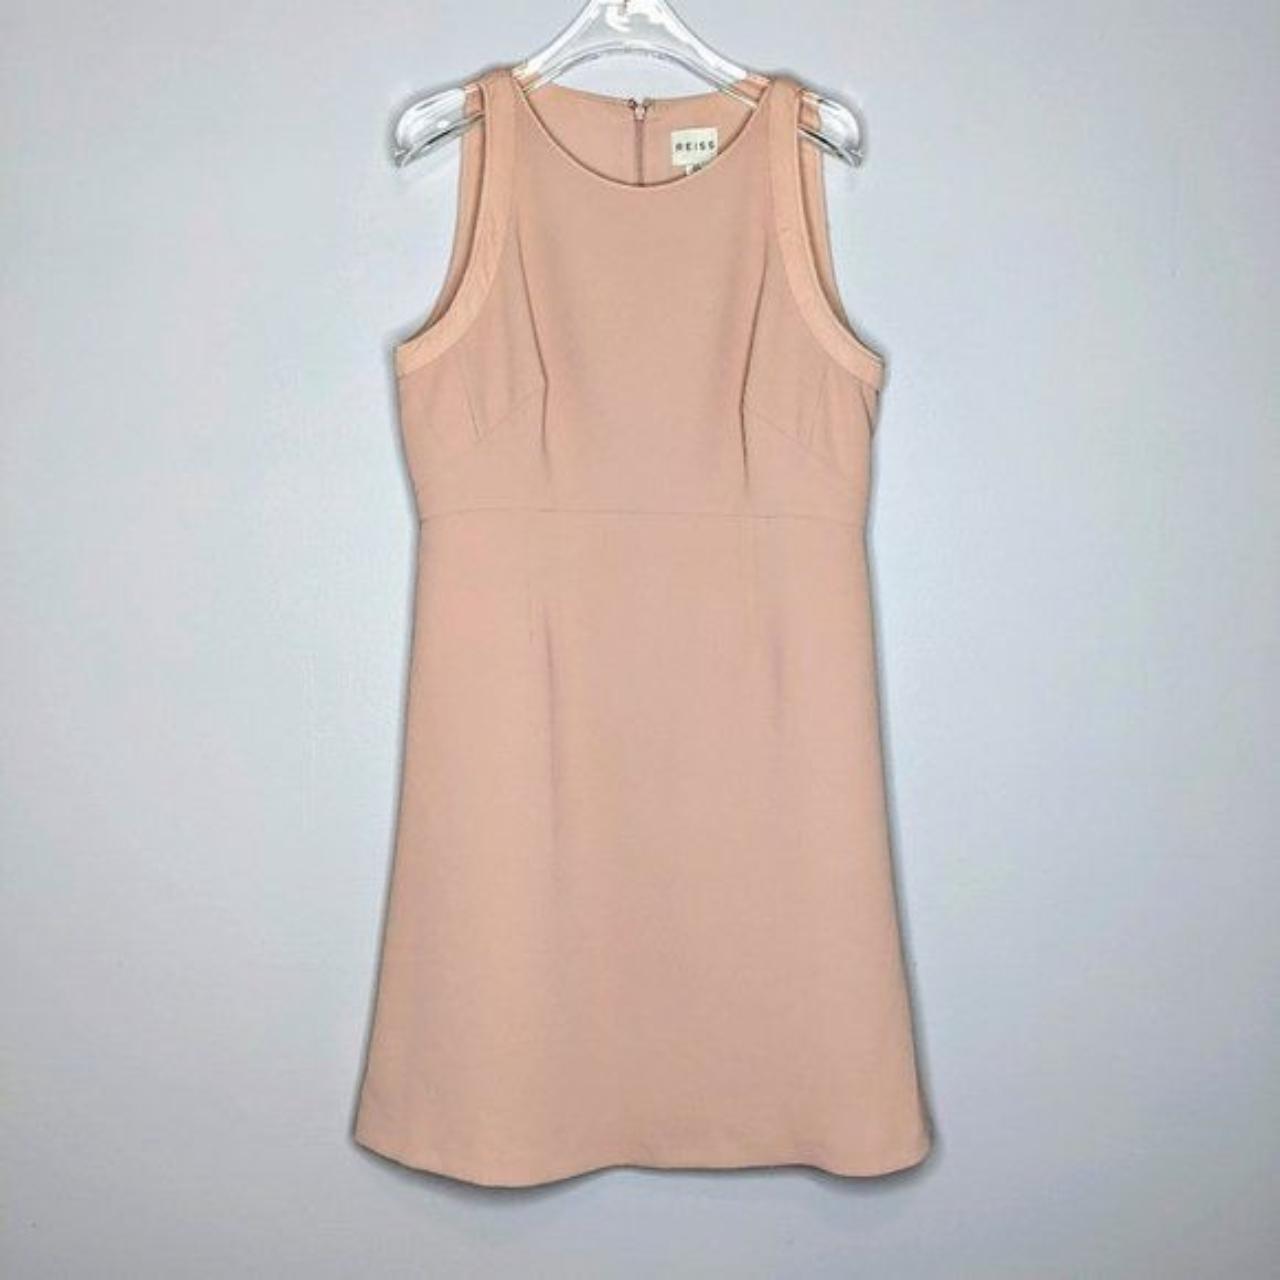 Product Image 1 - Reiss sleeveless mini dress in